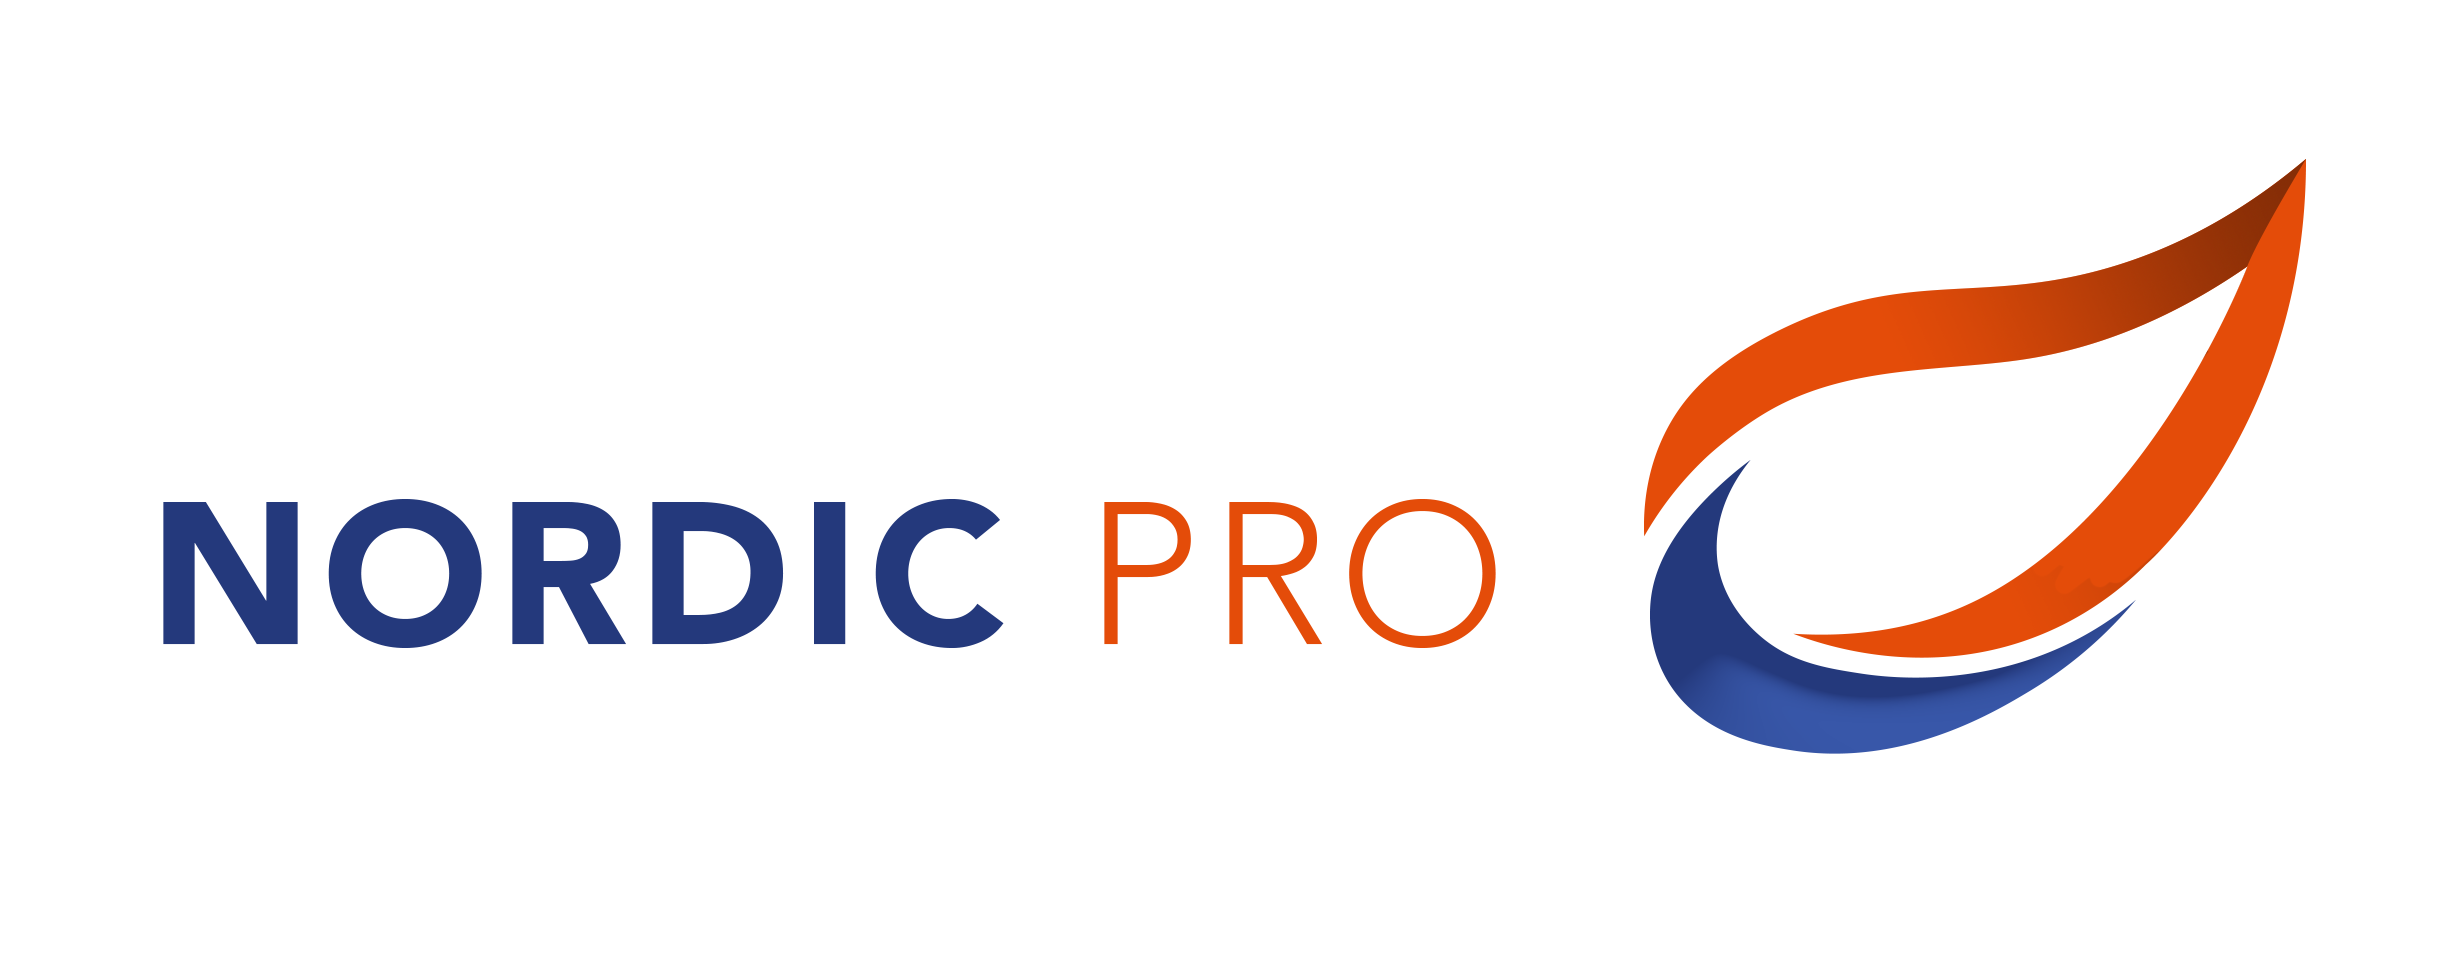 Nordic Pro ll